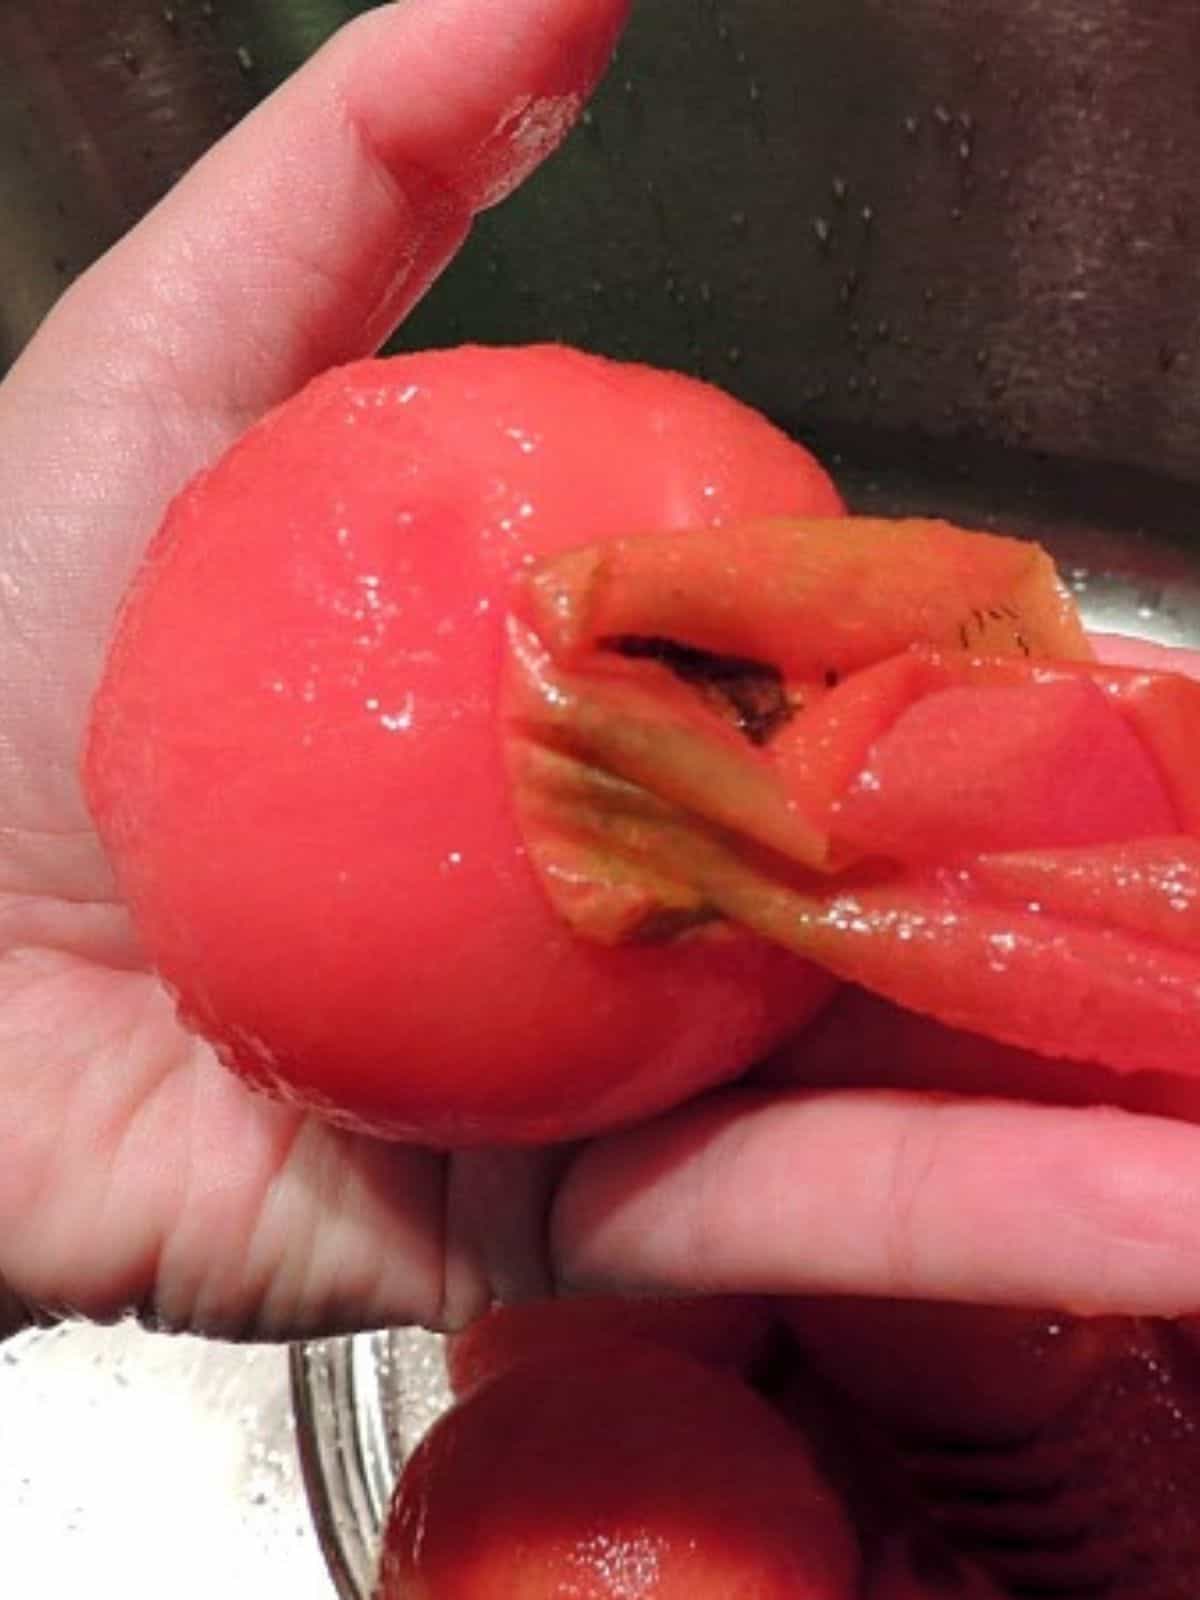 Peeled tomato.